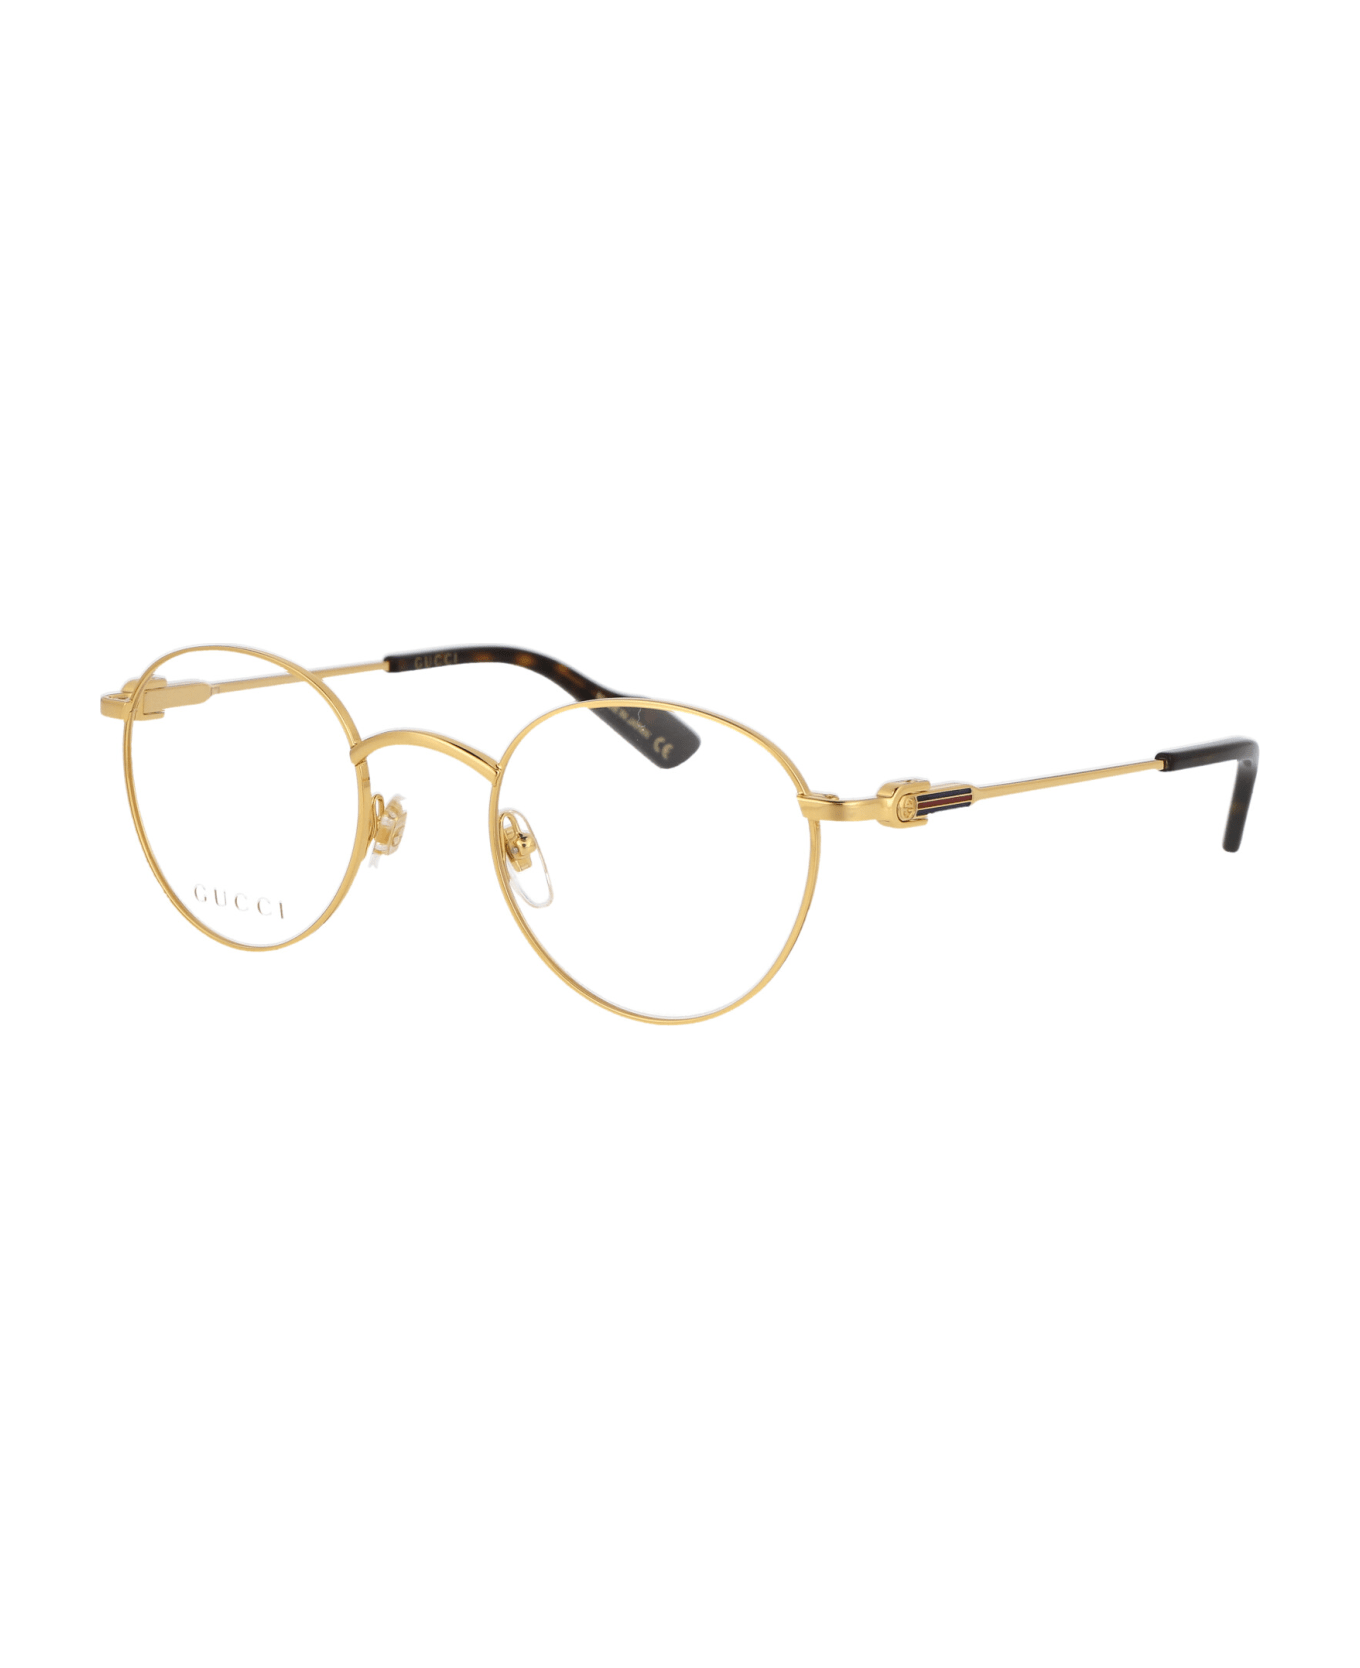 Gucci Eyewear Gg1222o Glasses - 002 GOLD GOLD TRANSPARENT